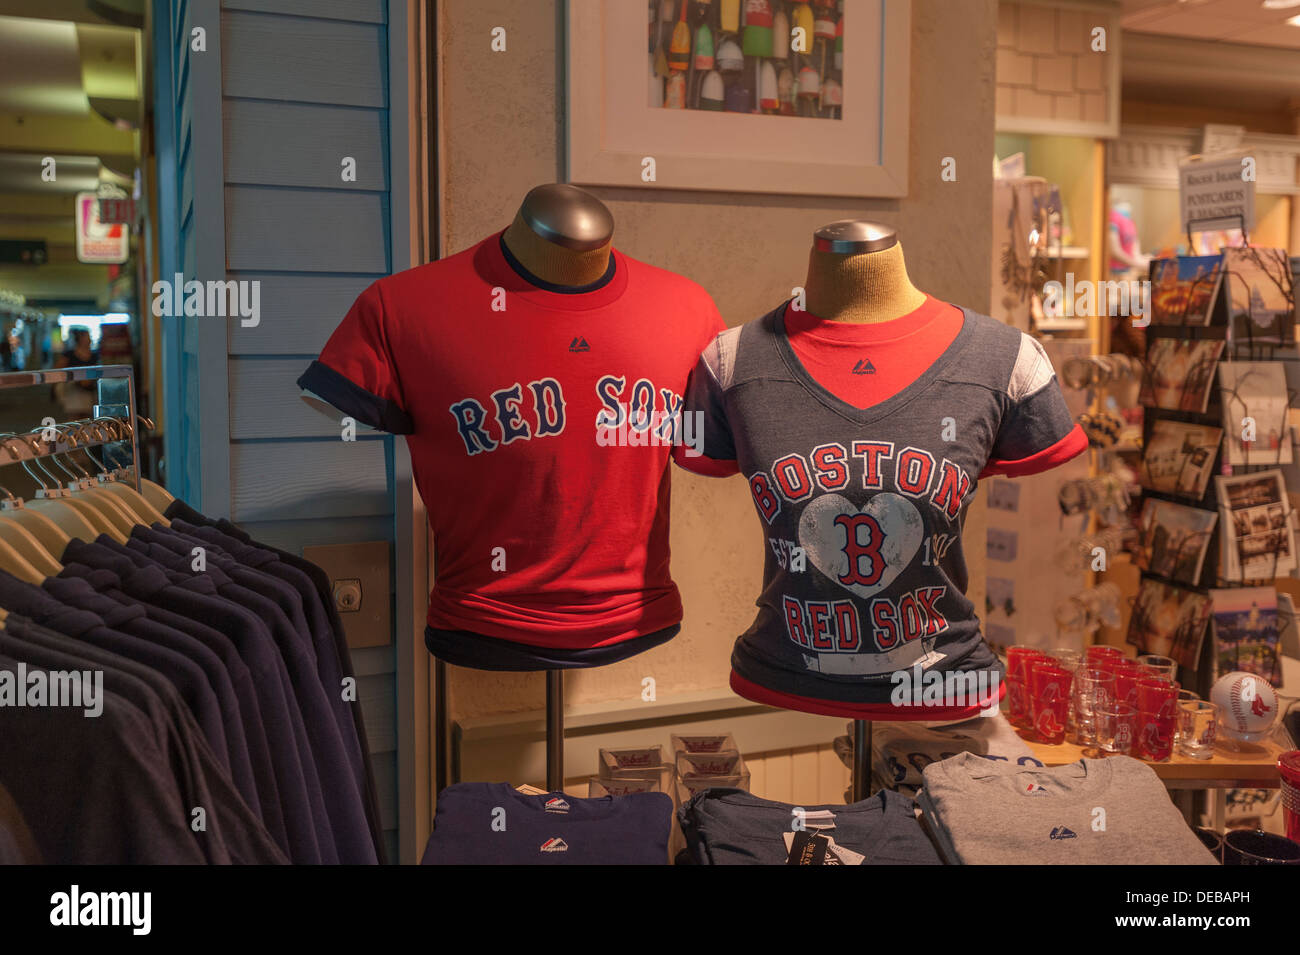 boston red sox clothing